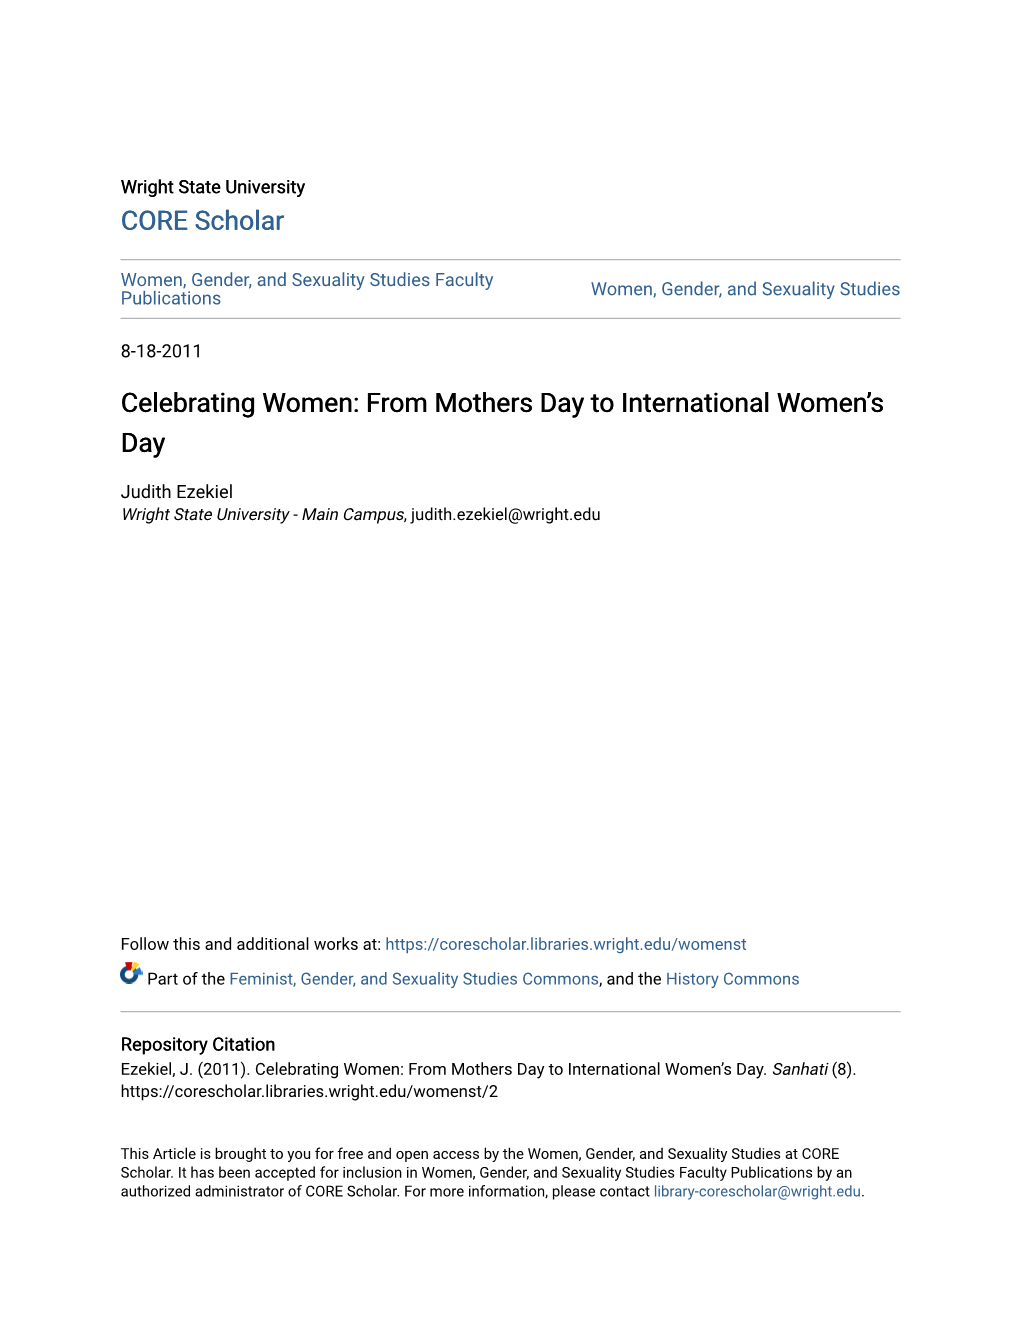 Celebrating Women: from Mothers Day to International Womenâ•Žs